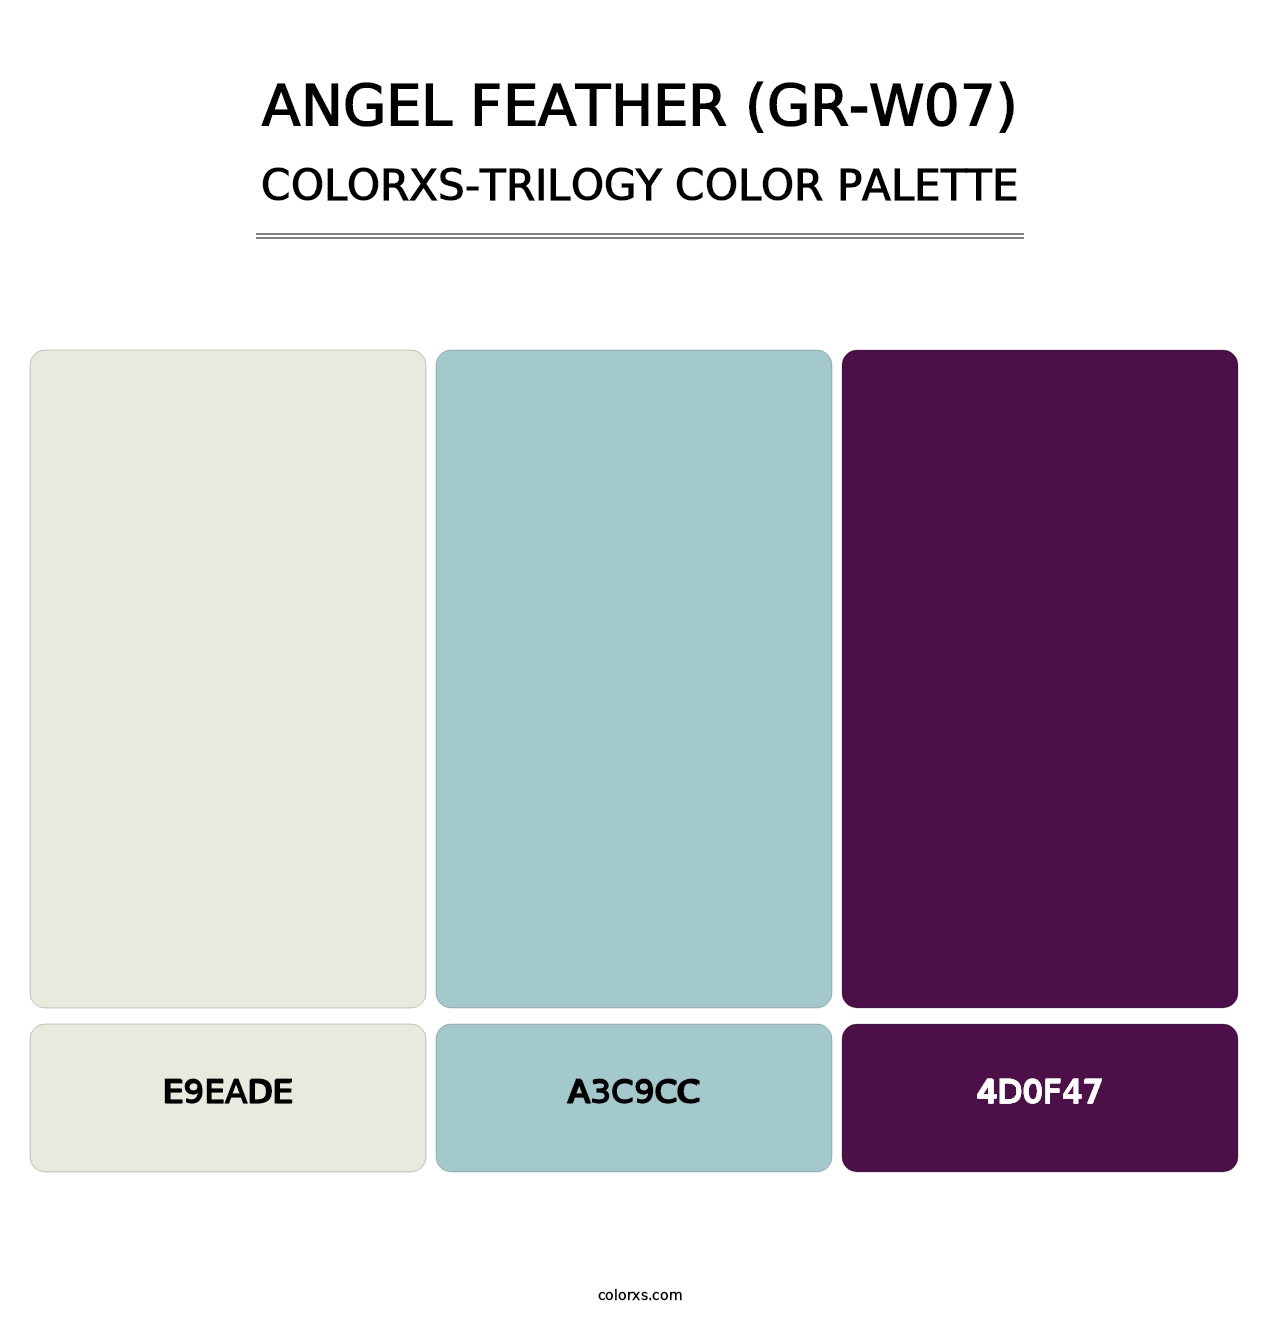 Angel Feather (GR-W07) - Colorxs Trilogy Palette